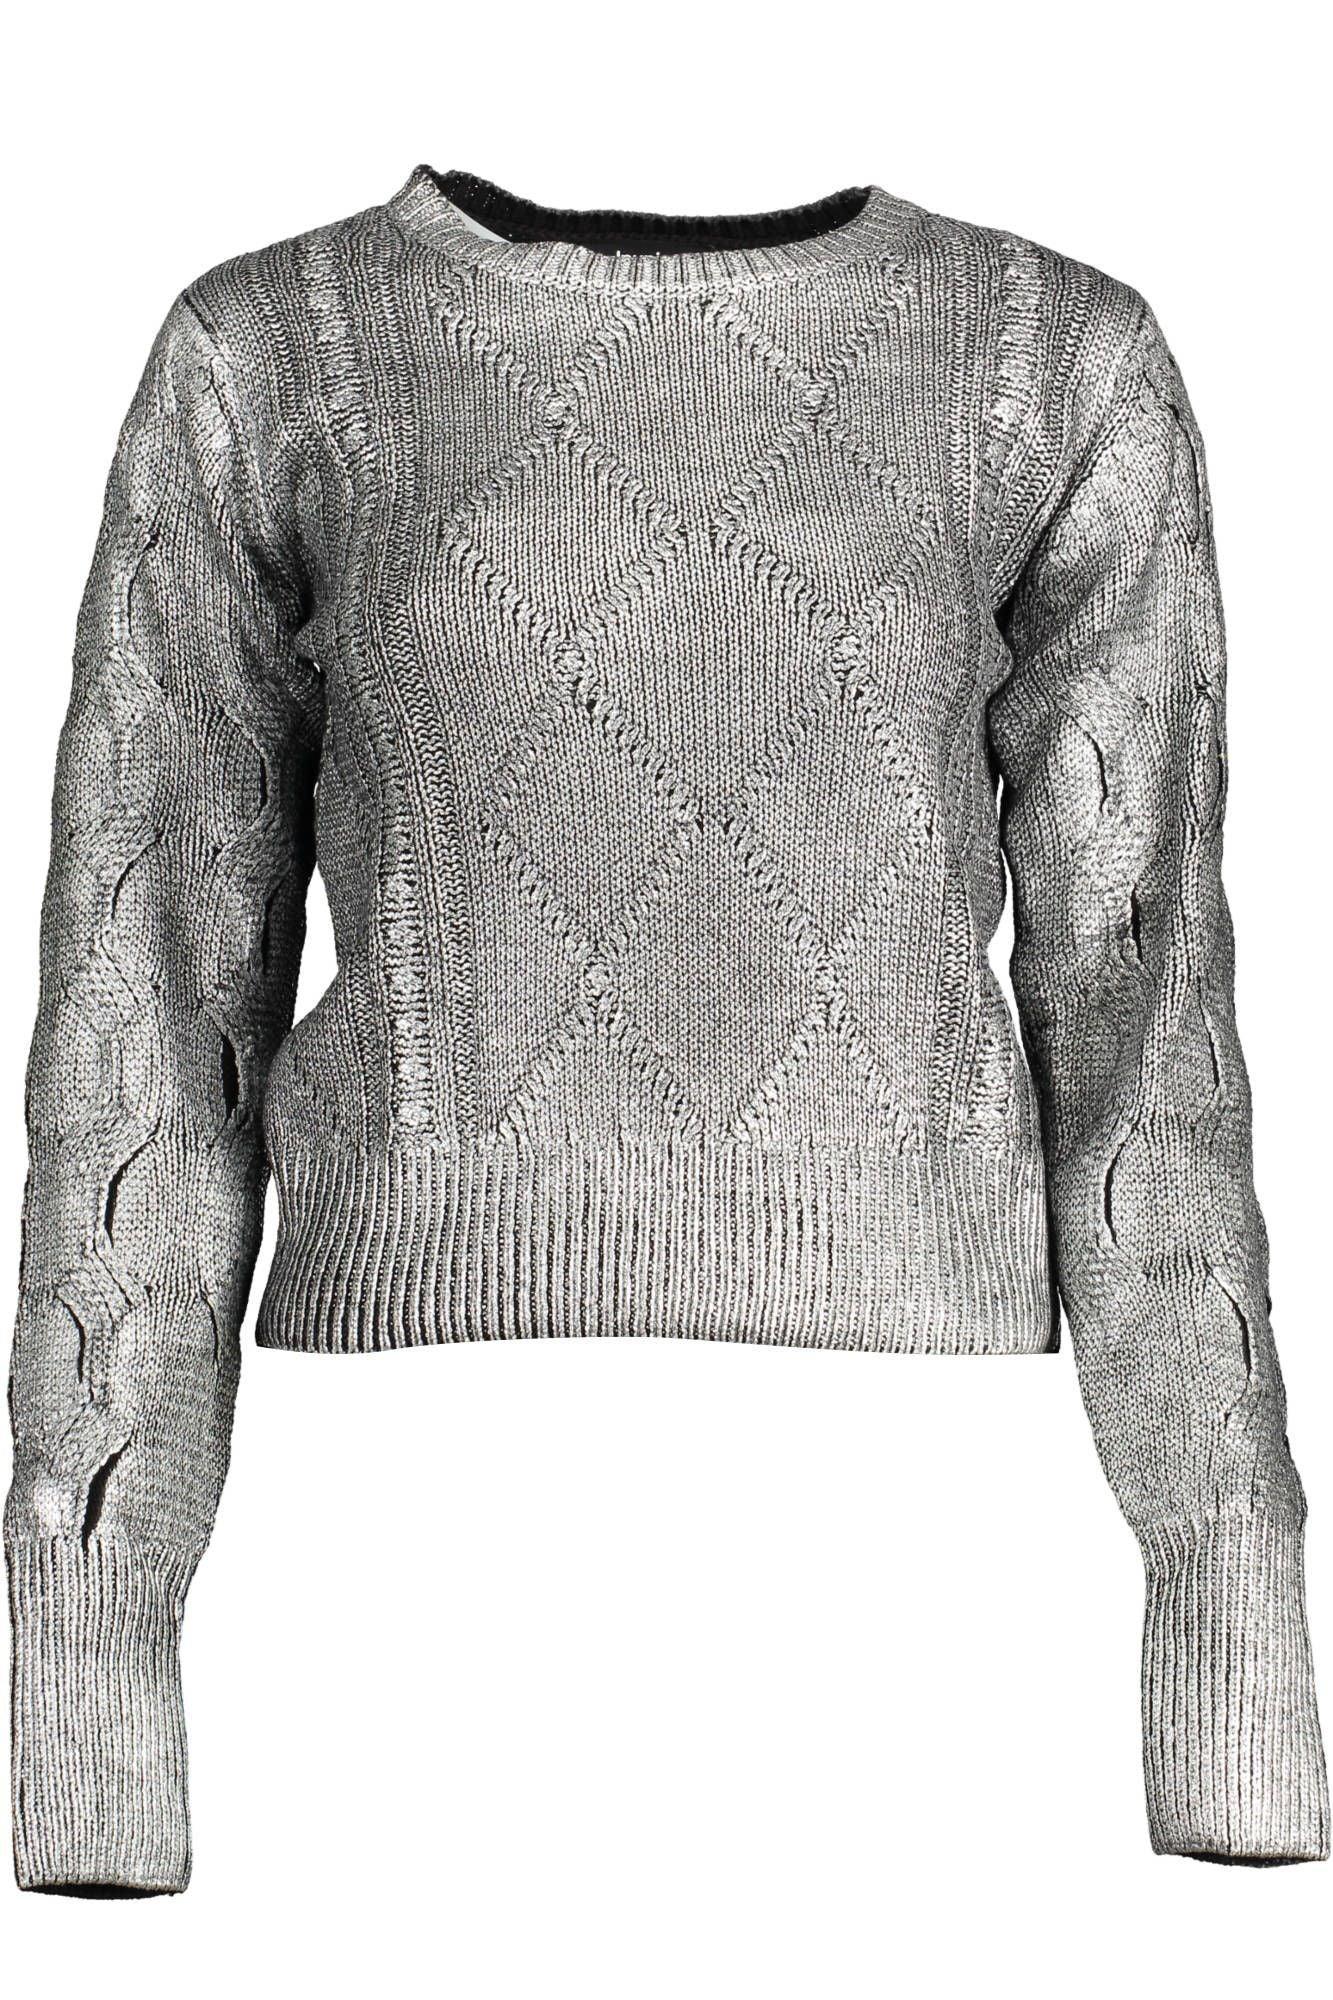 Desigual Chic Silver Tone Contrast Detail Sweater - PER.FASHION